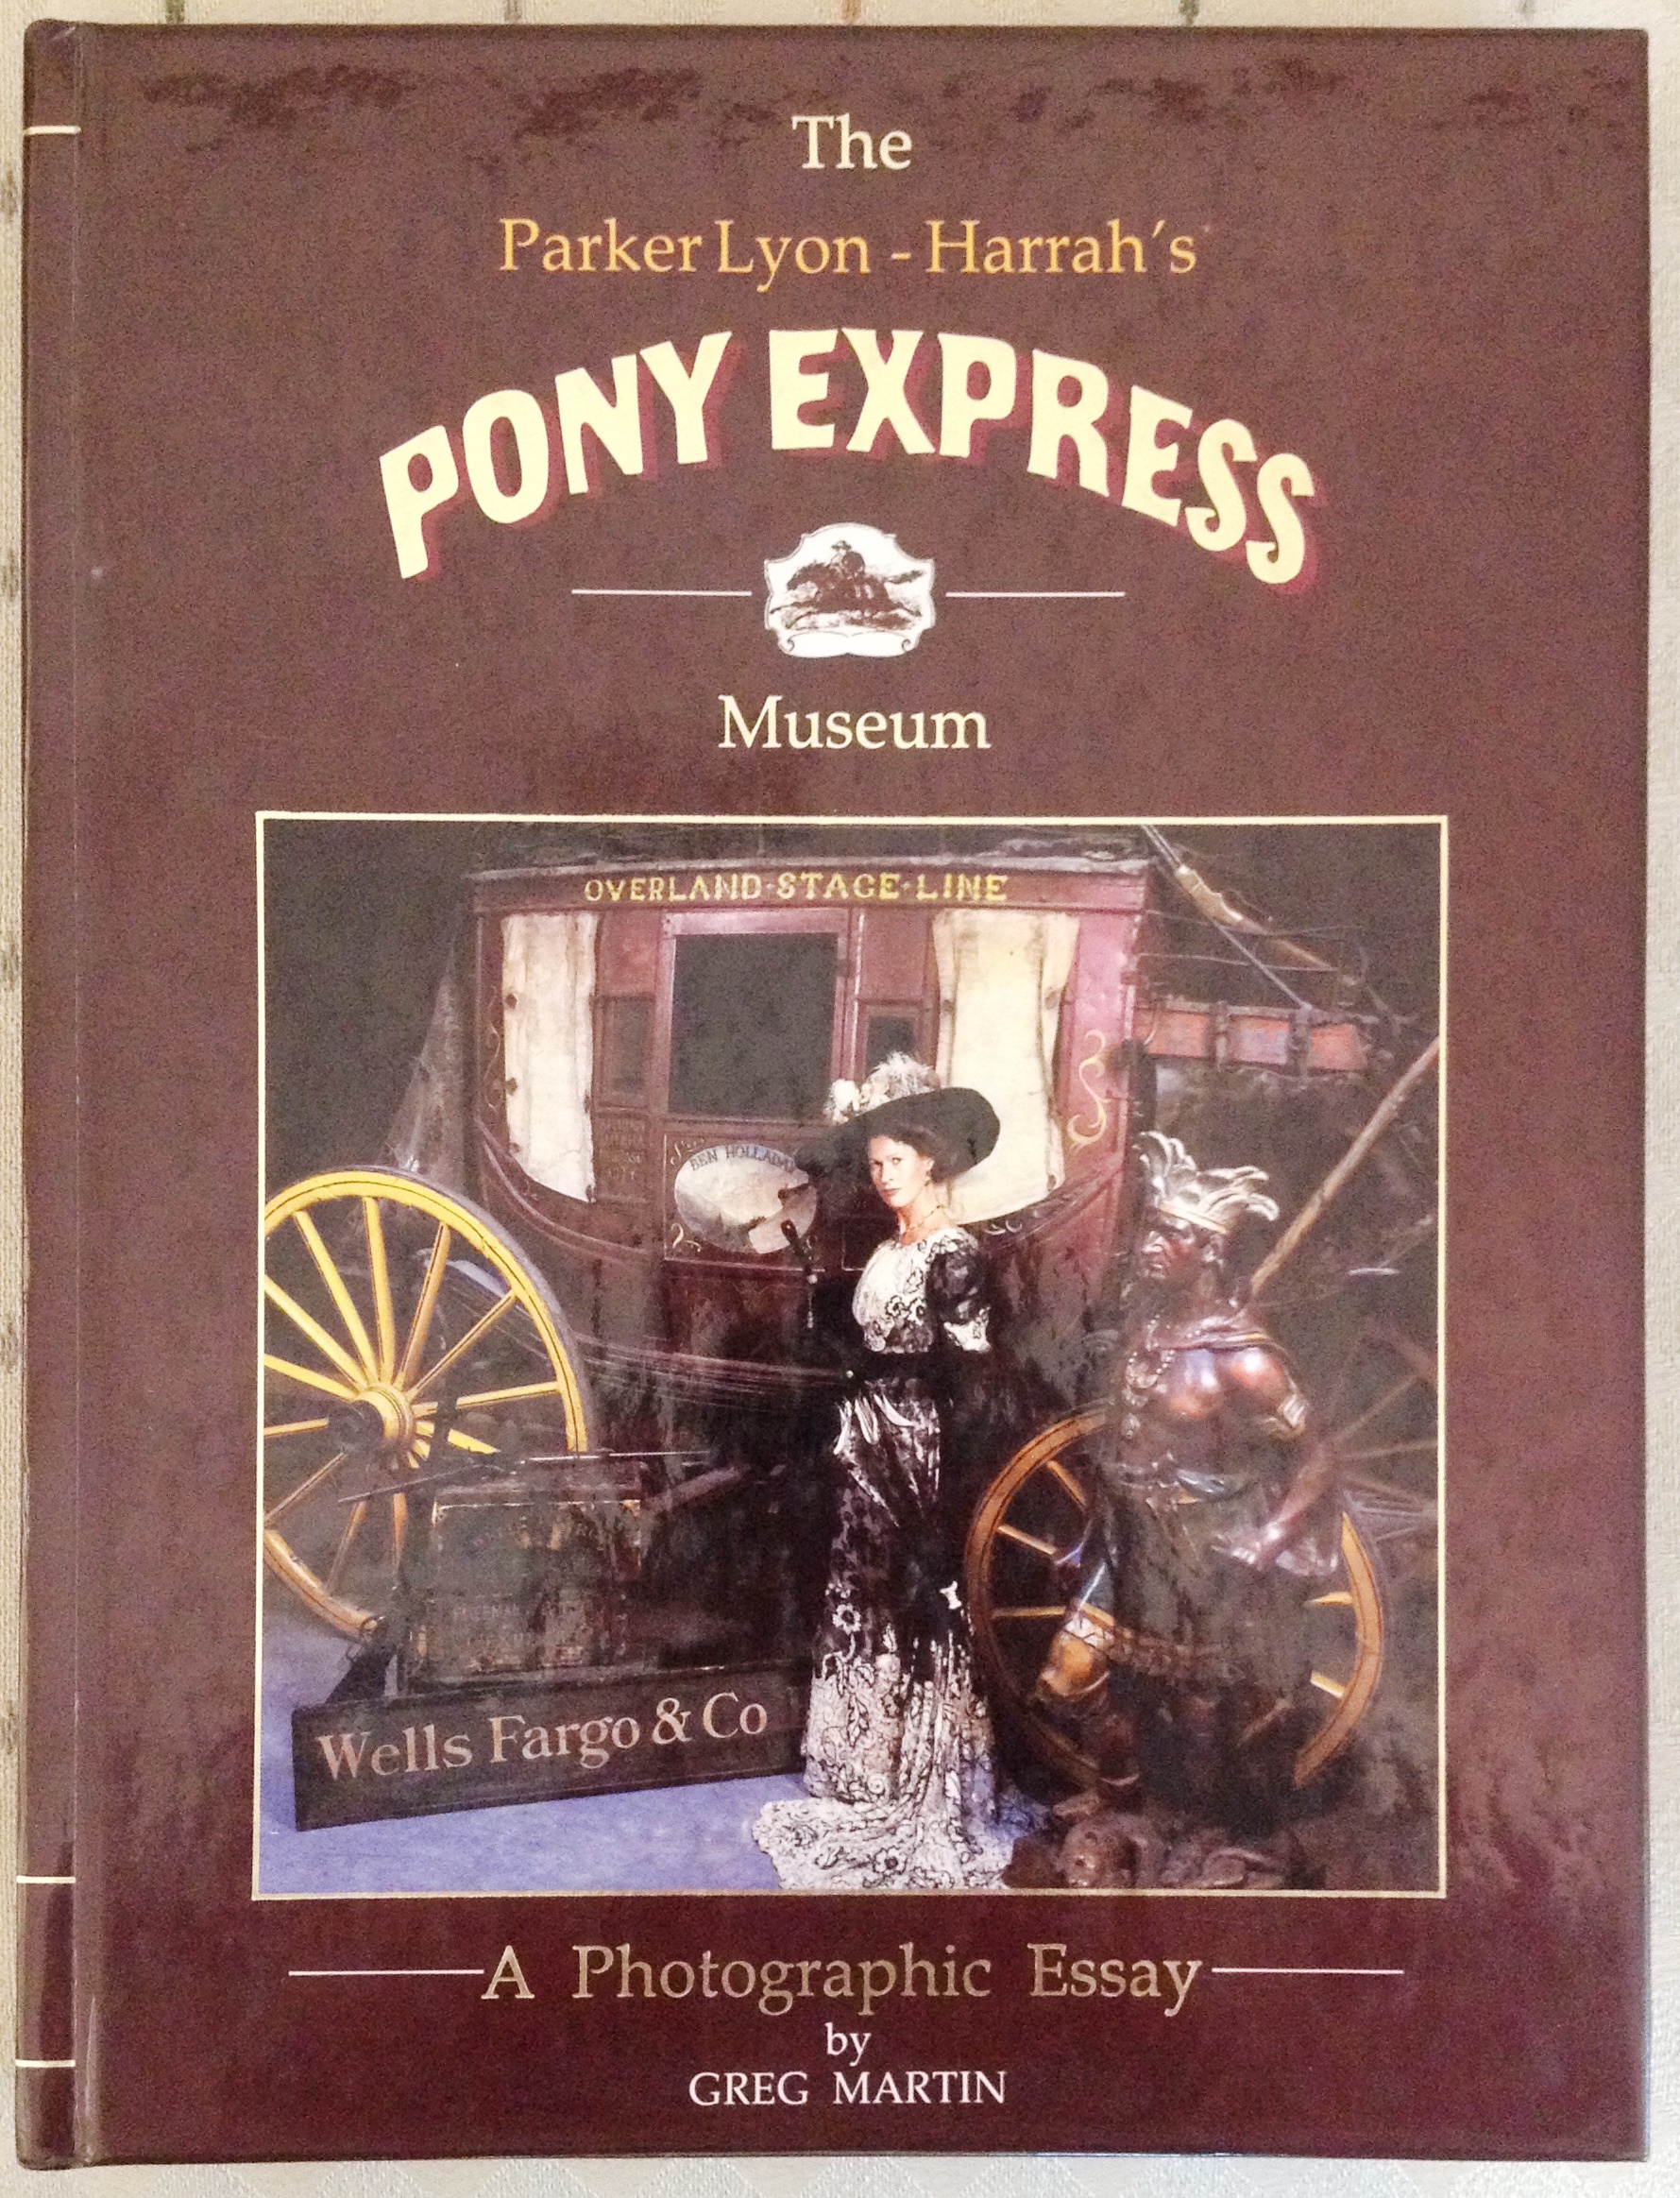 The Parker Lyon book - Pony Express Museum